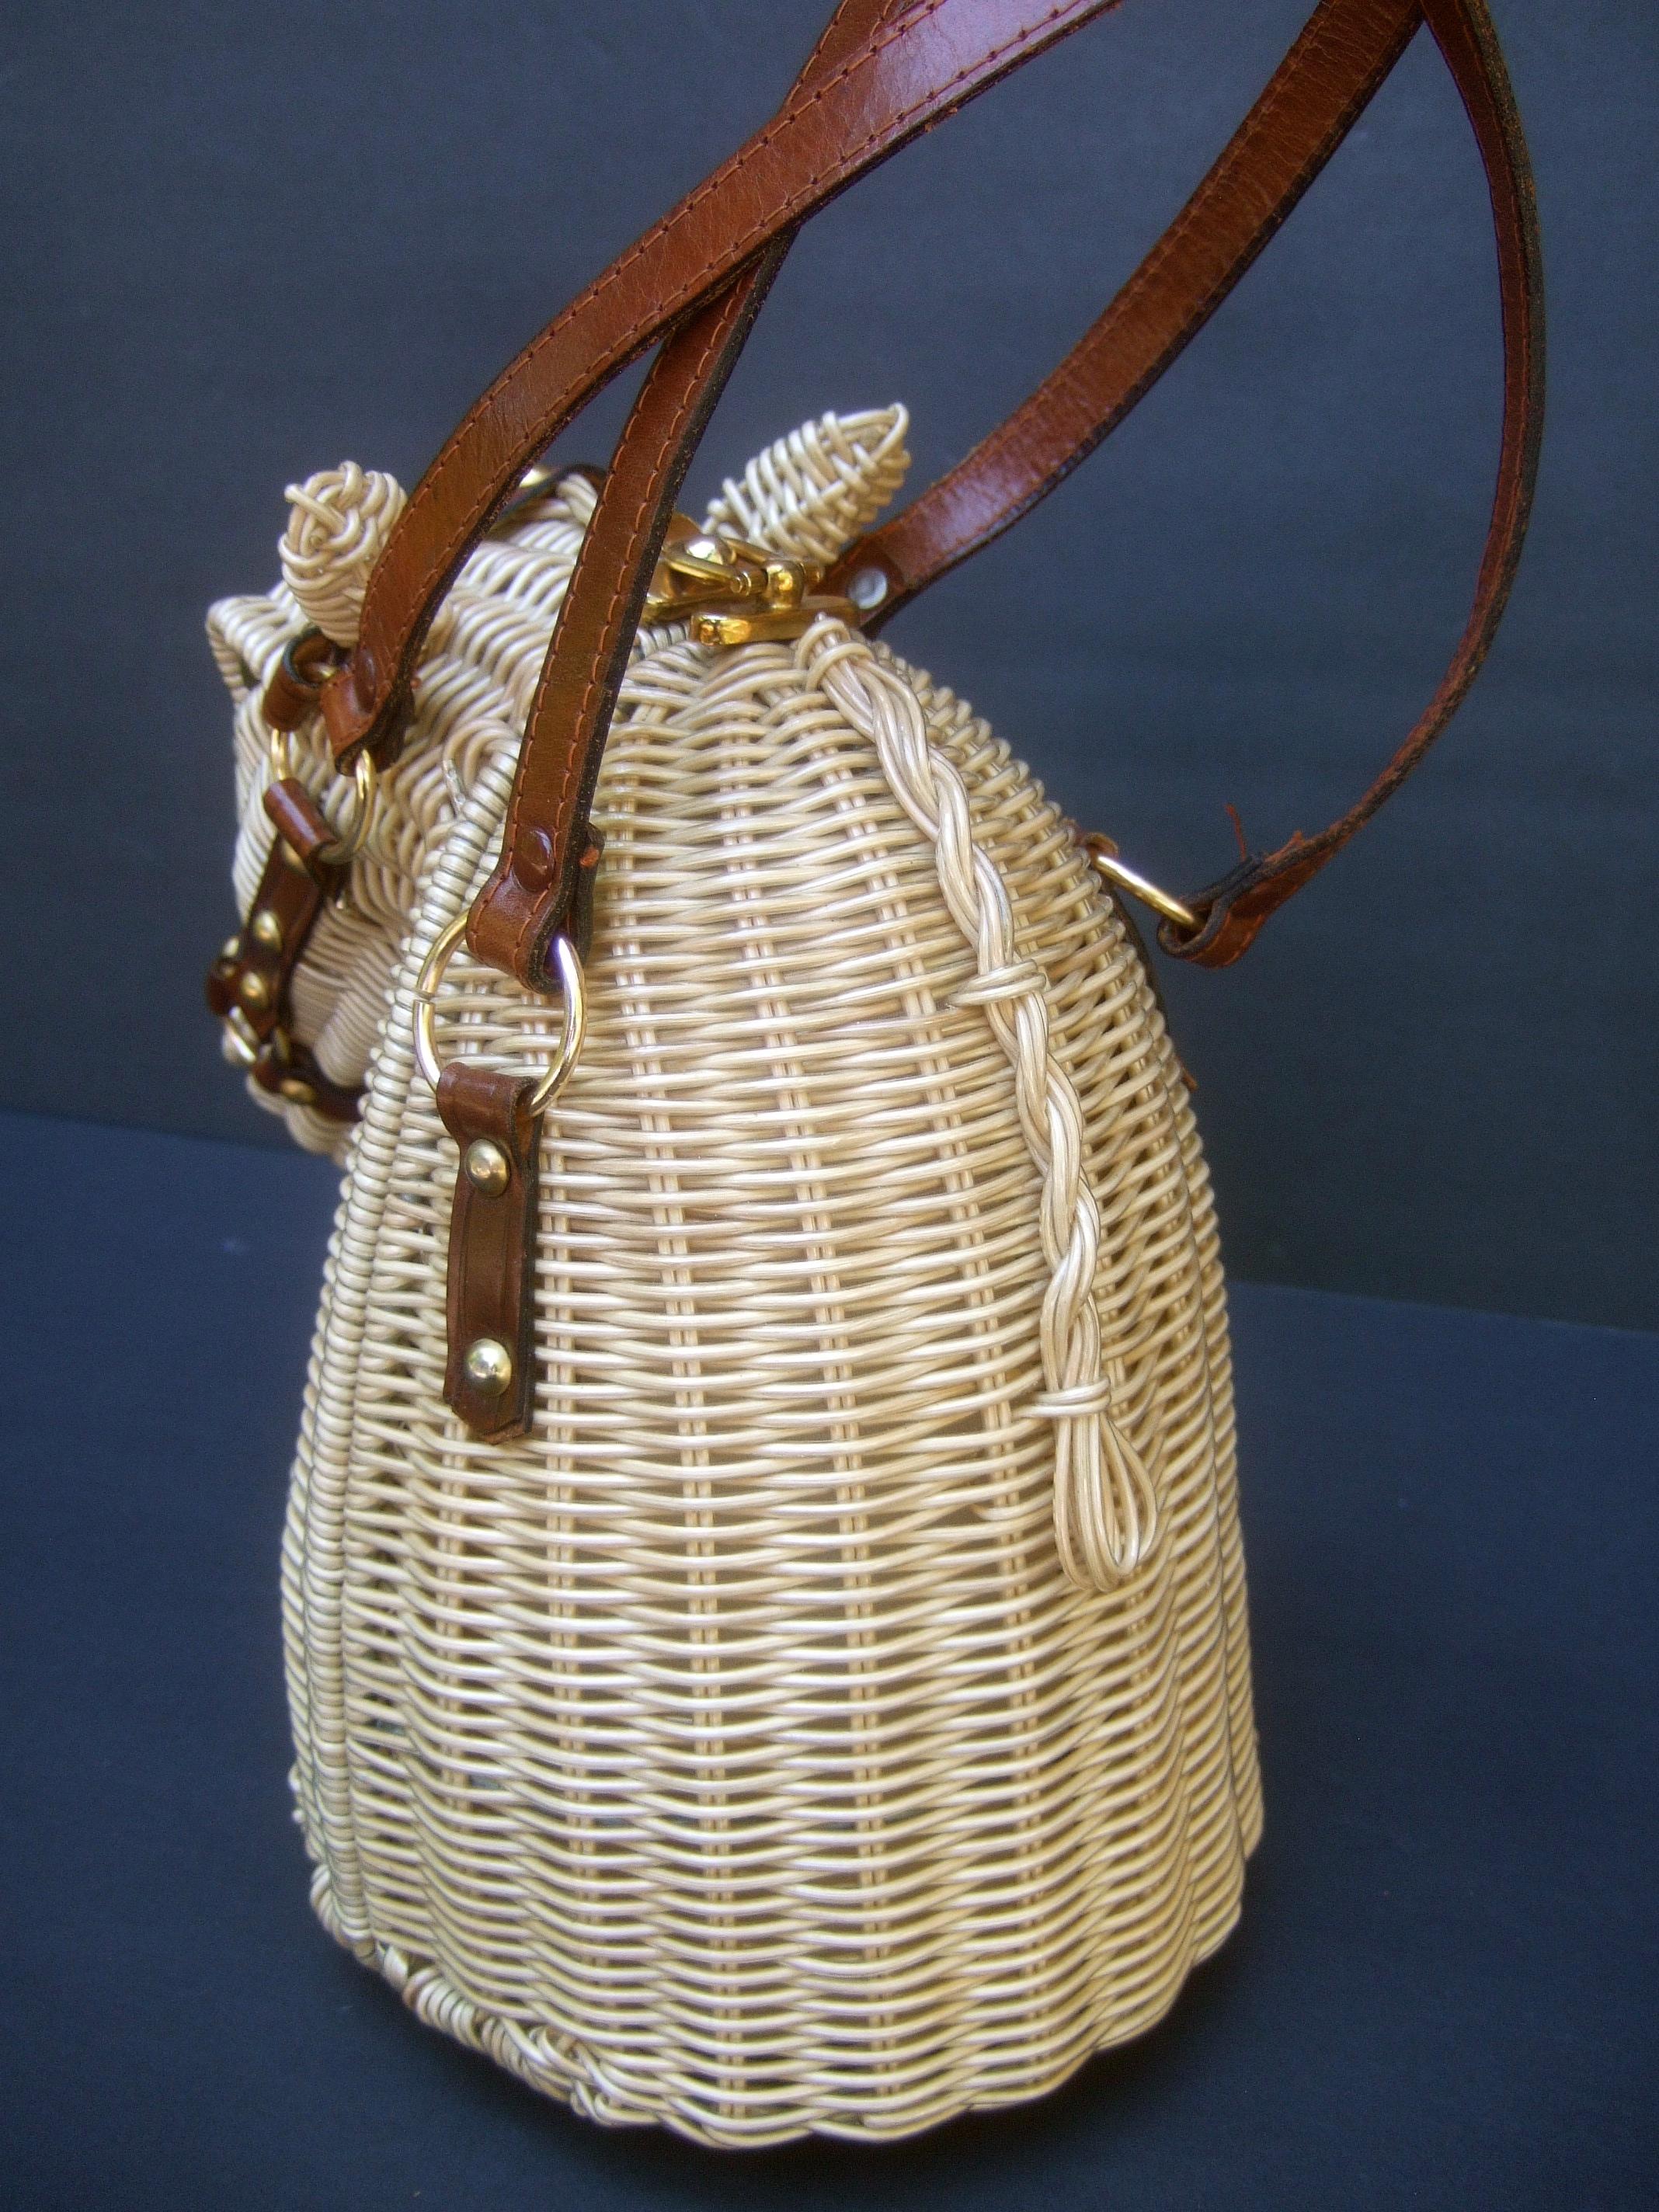 Extremely Rare Figural Wicker Artisan Horse Design Handbag c 1970 10